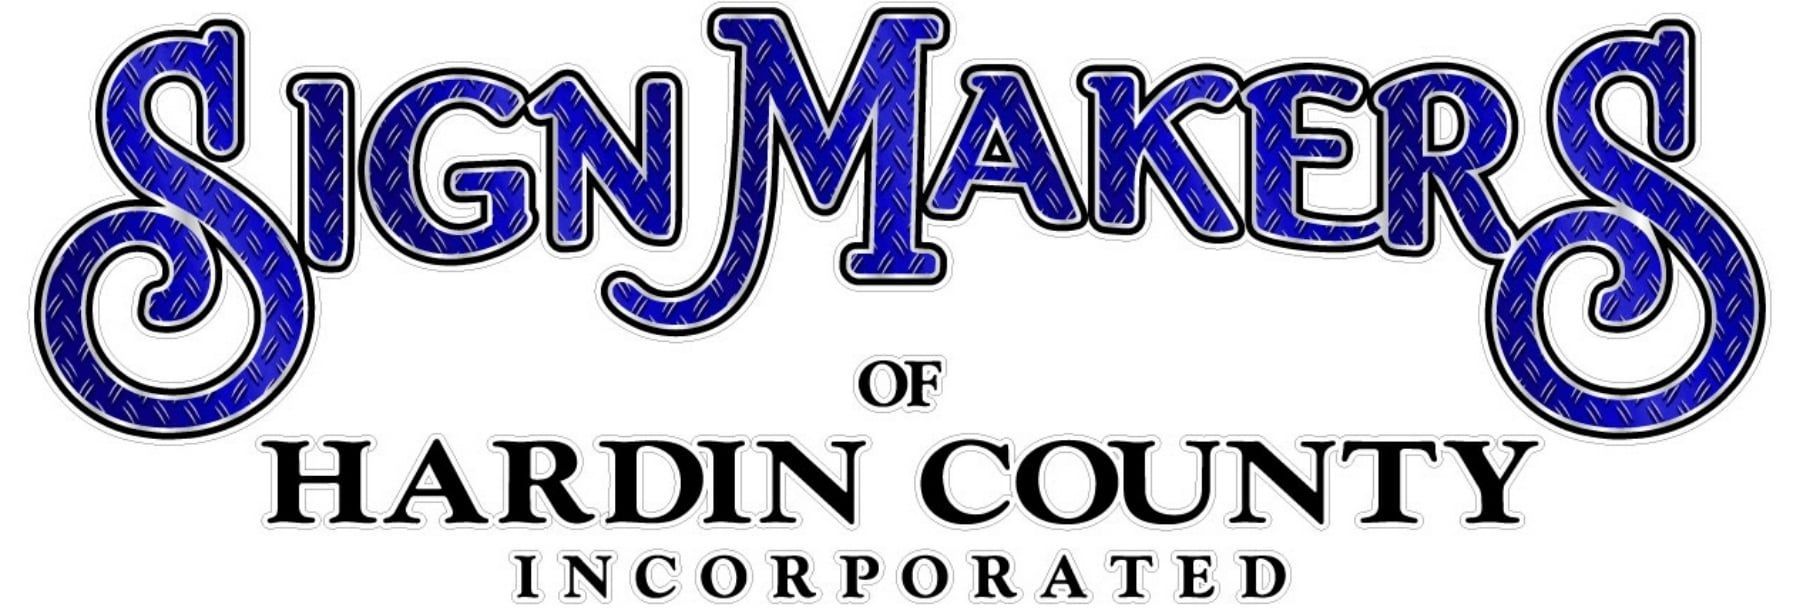 SignMakers of Hardin County Inc. logo